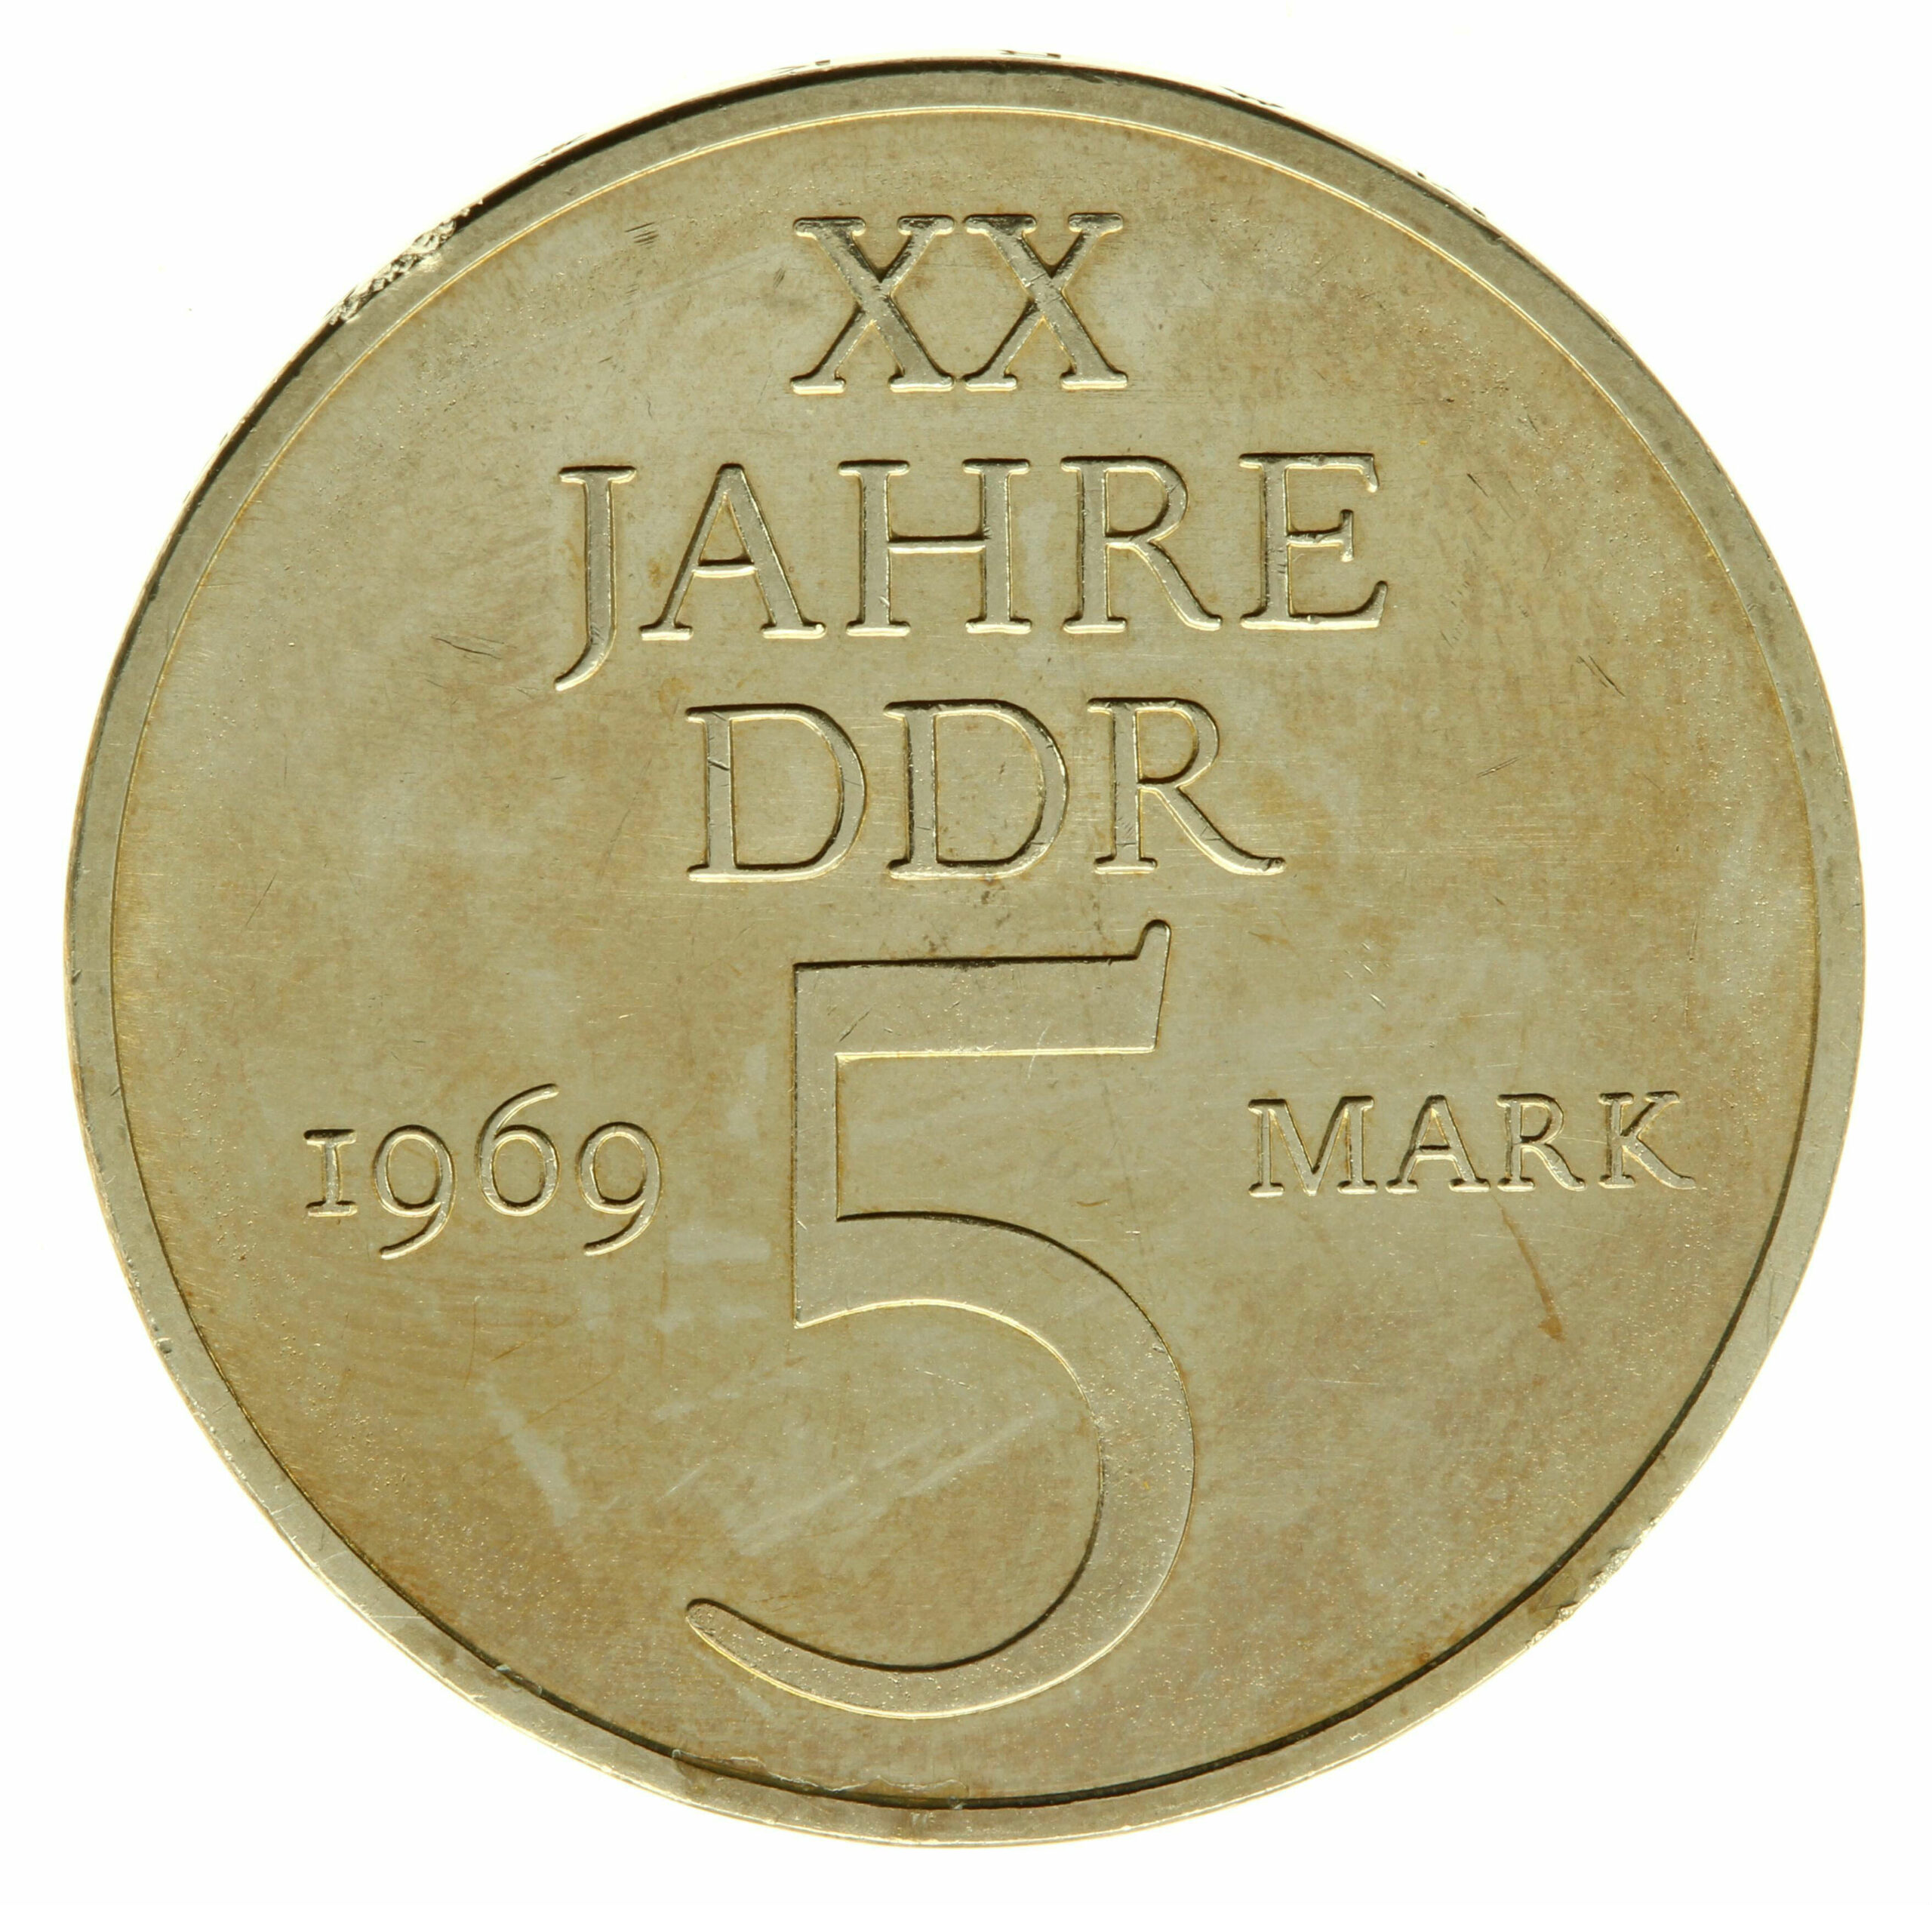 DE 5 Mark der DDR 1969